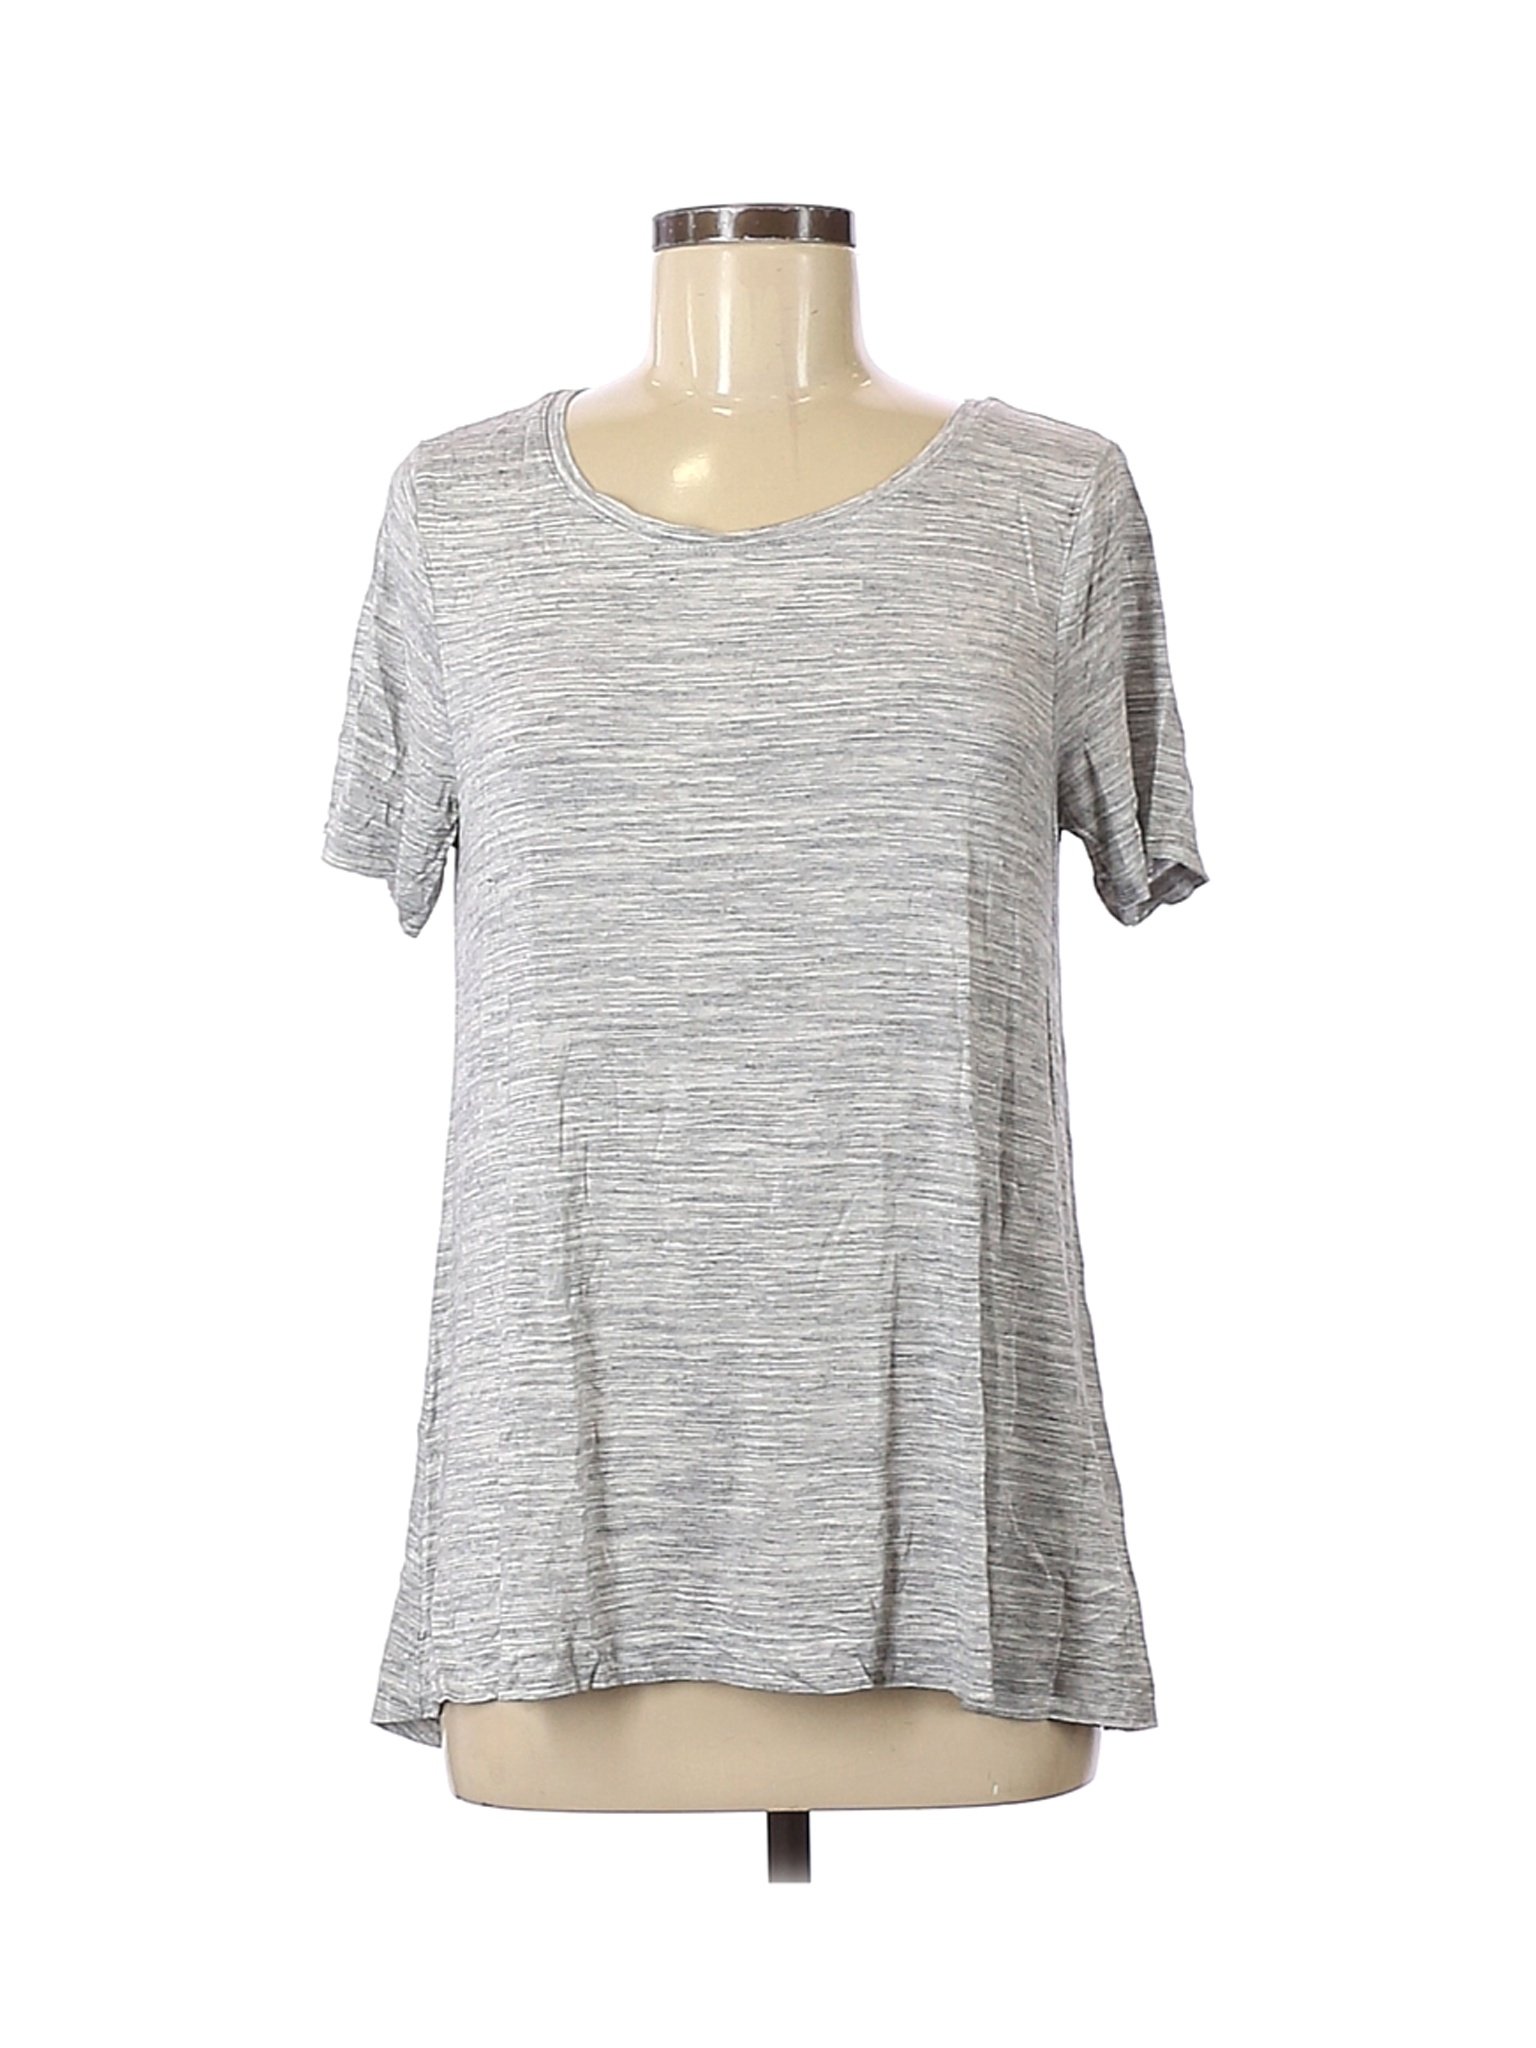 Old Navy Women Gray Short Sleeve T-Shirt M | eBay